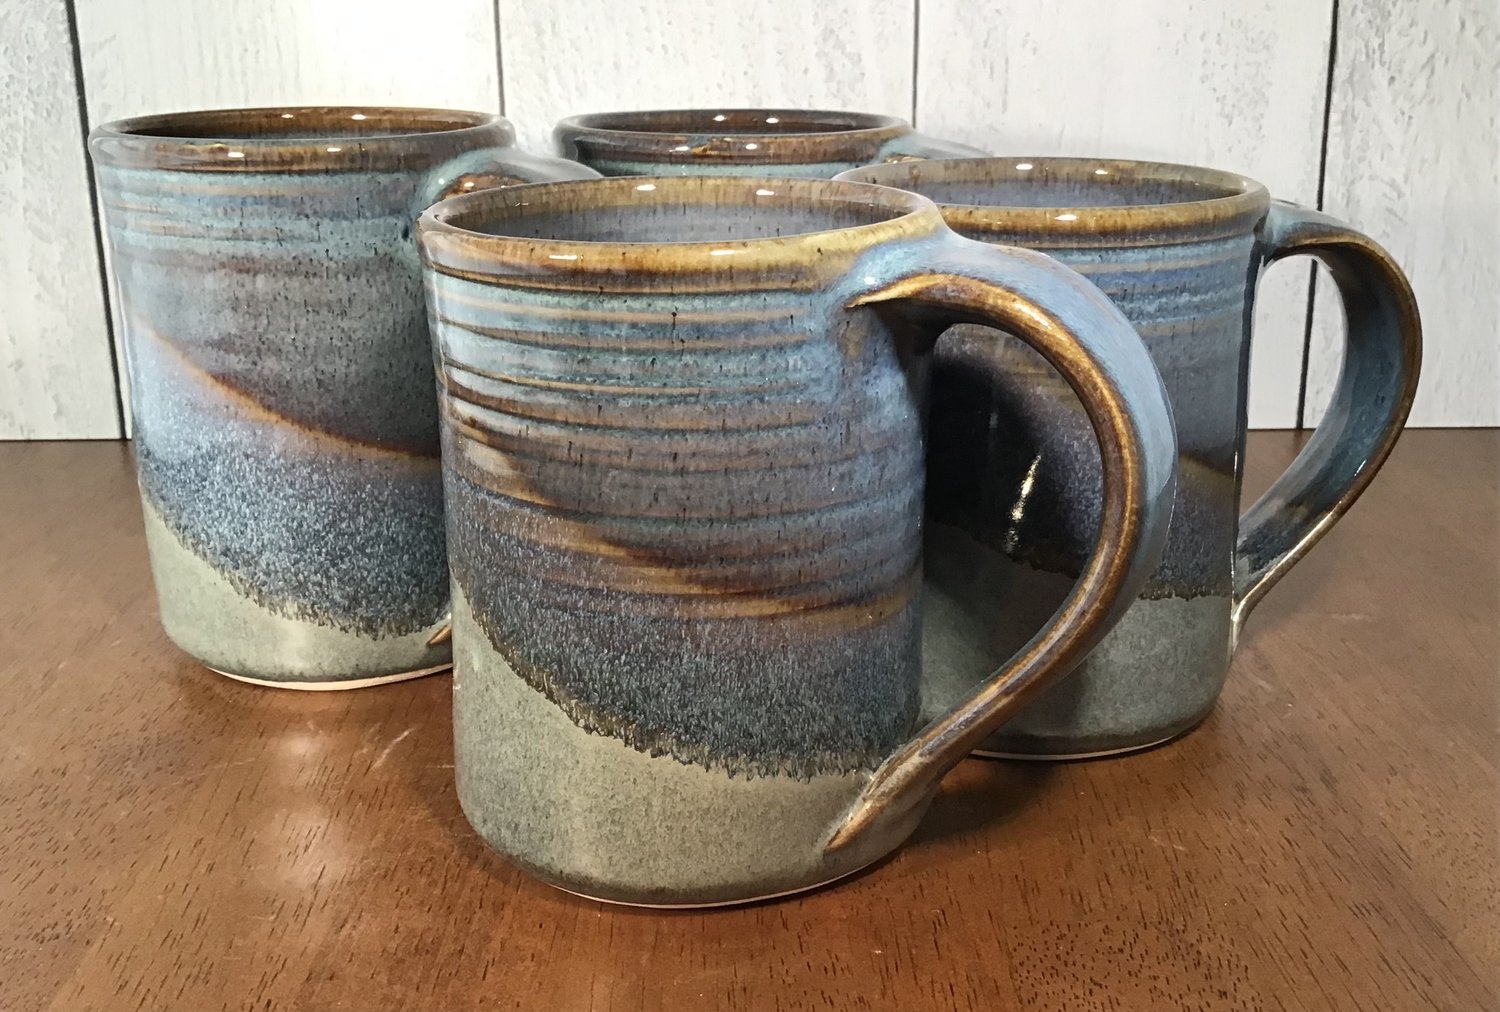 Set of 2 White Ceramic Mugs, Pottery Handmade Coffee Mugs Set With Handle,  Huggable Straight Large Tea Mugs, Rustic Modern Look Mugs 